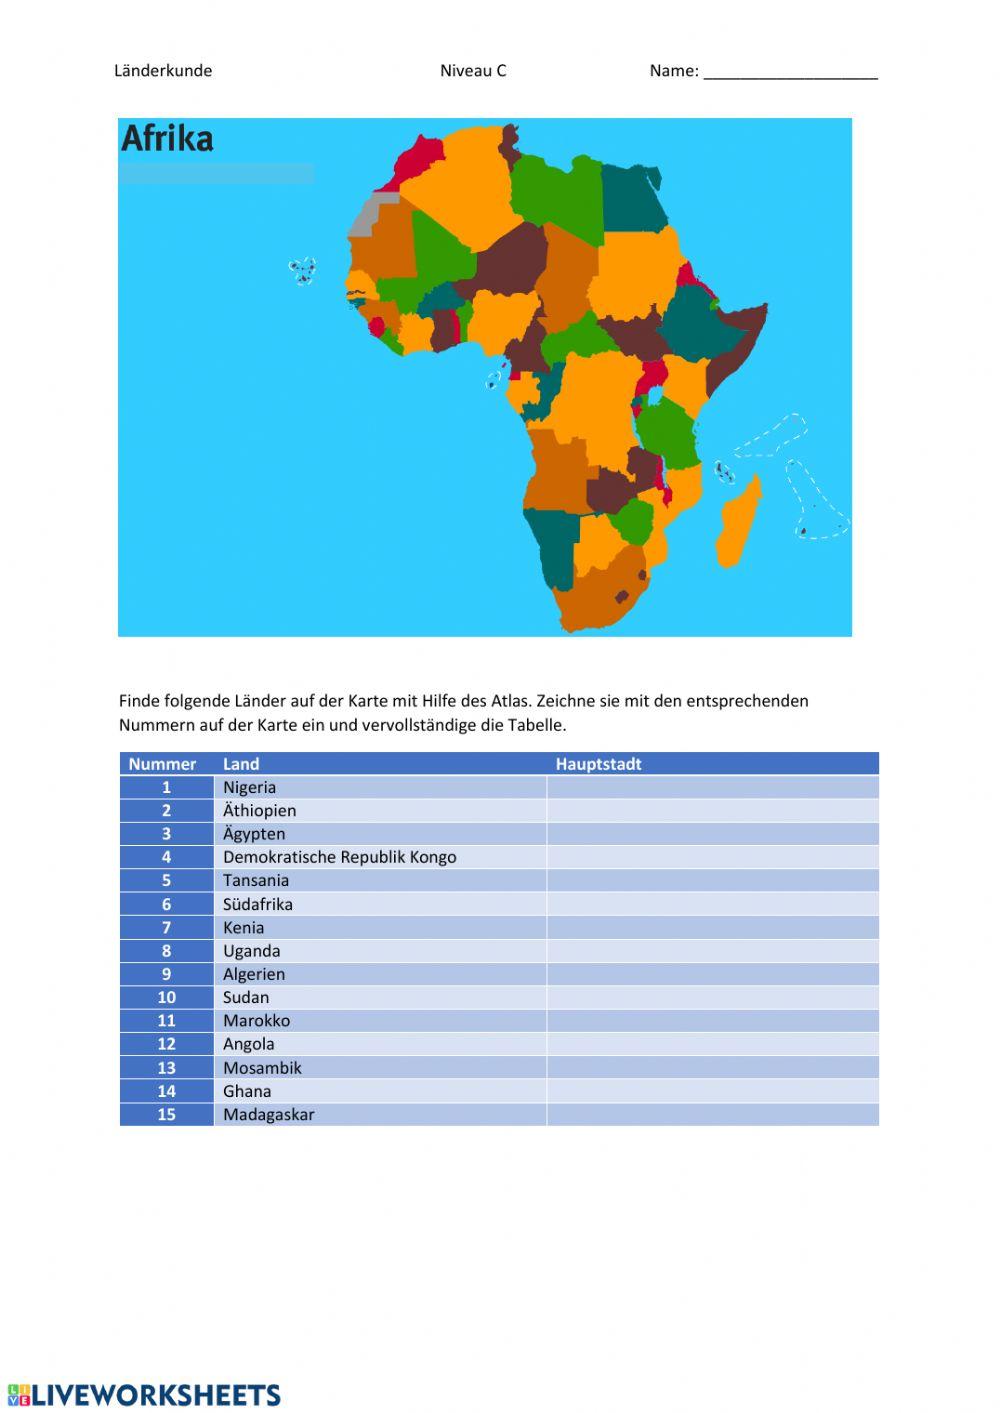 Länderkunde Afrika